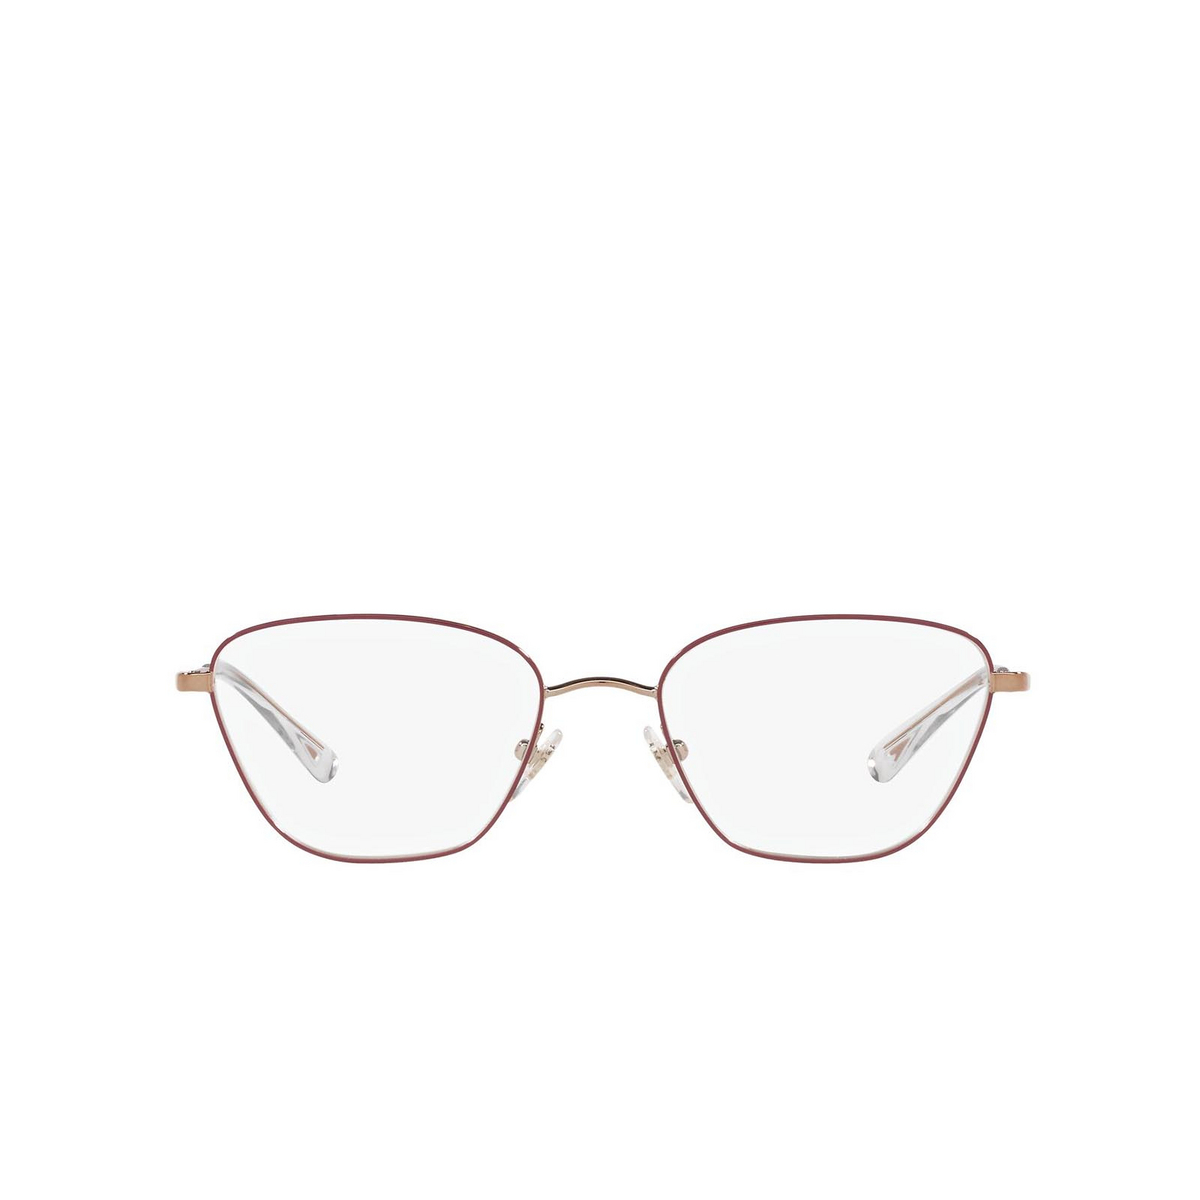 Vogue VO4163 Eyeglasses 5089 Top Bordeaux / Gold Pink - front view